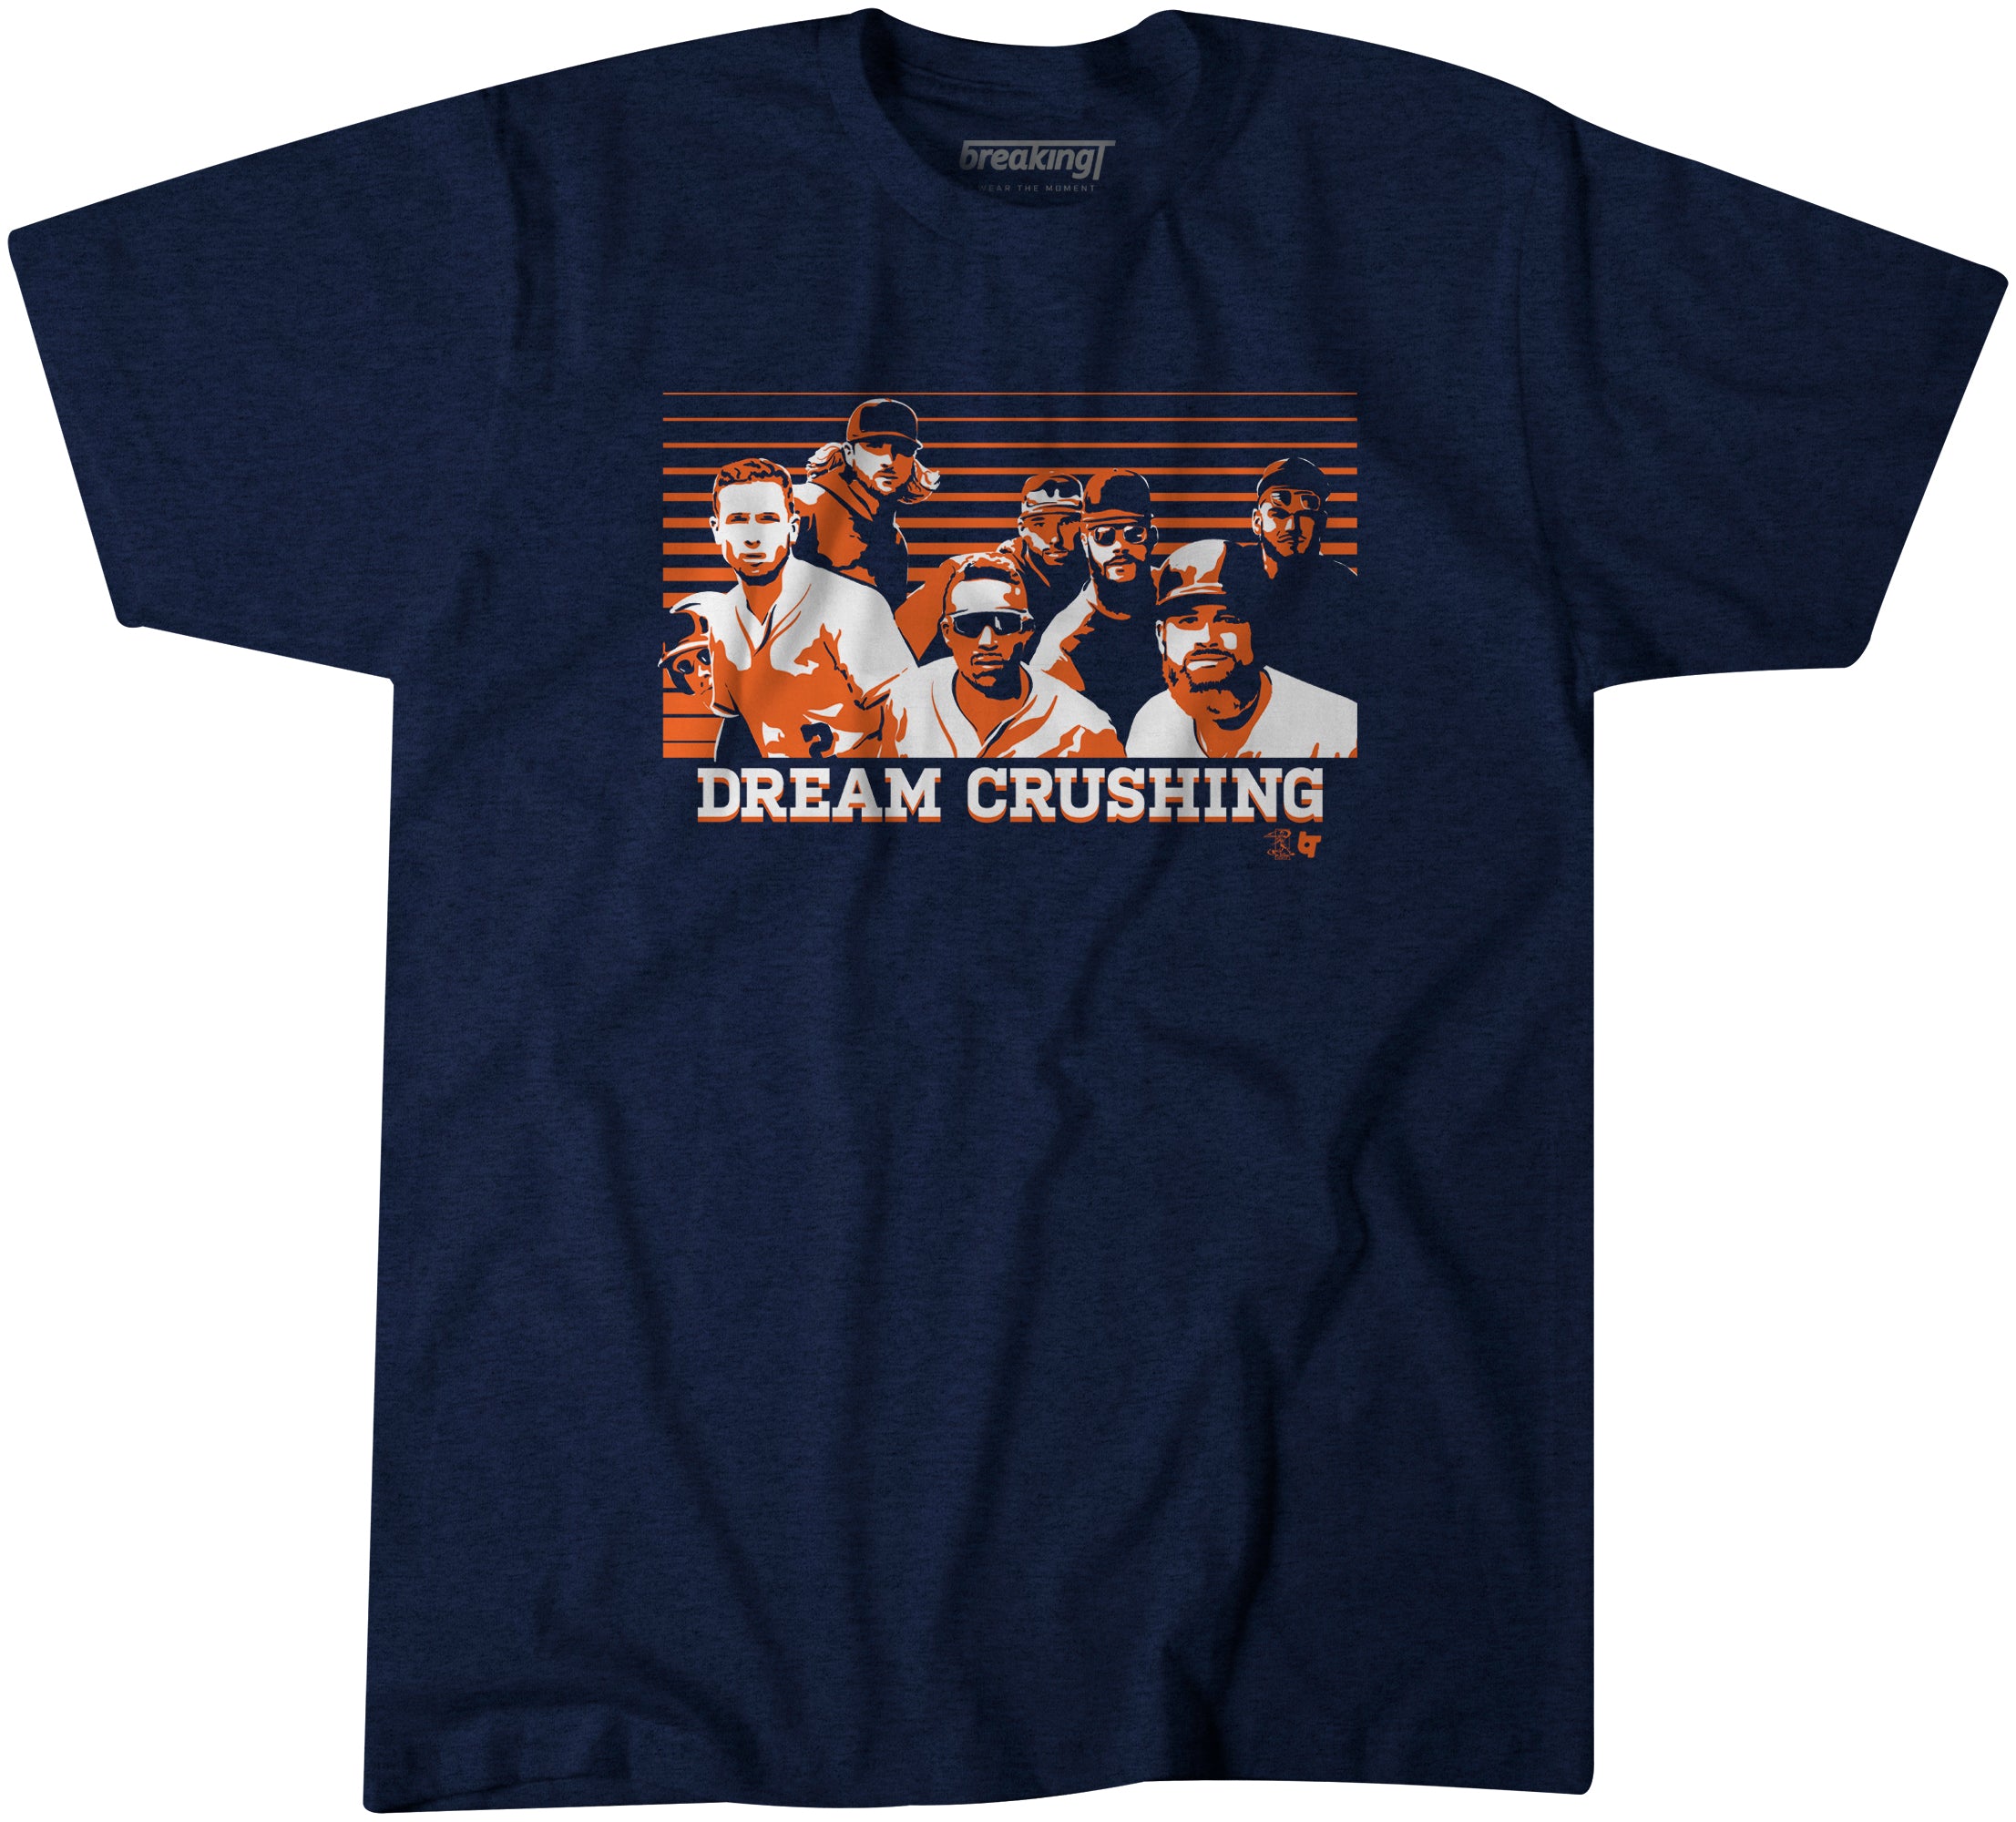 Be Spaceman Houston Astros shirt - Dalatshirt